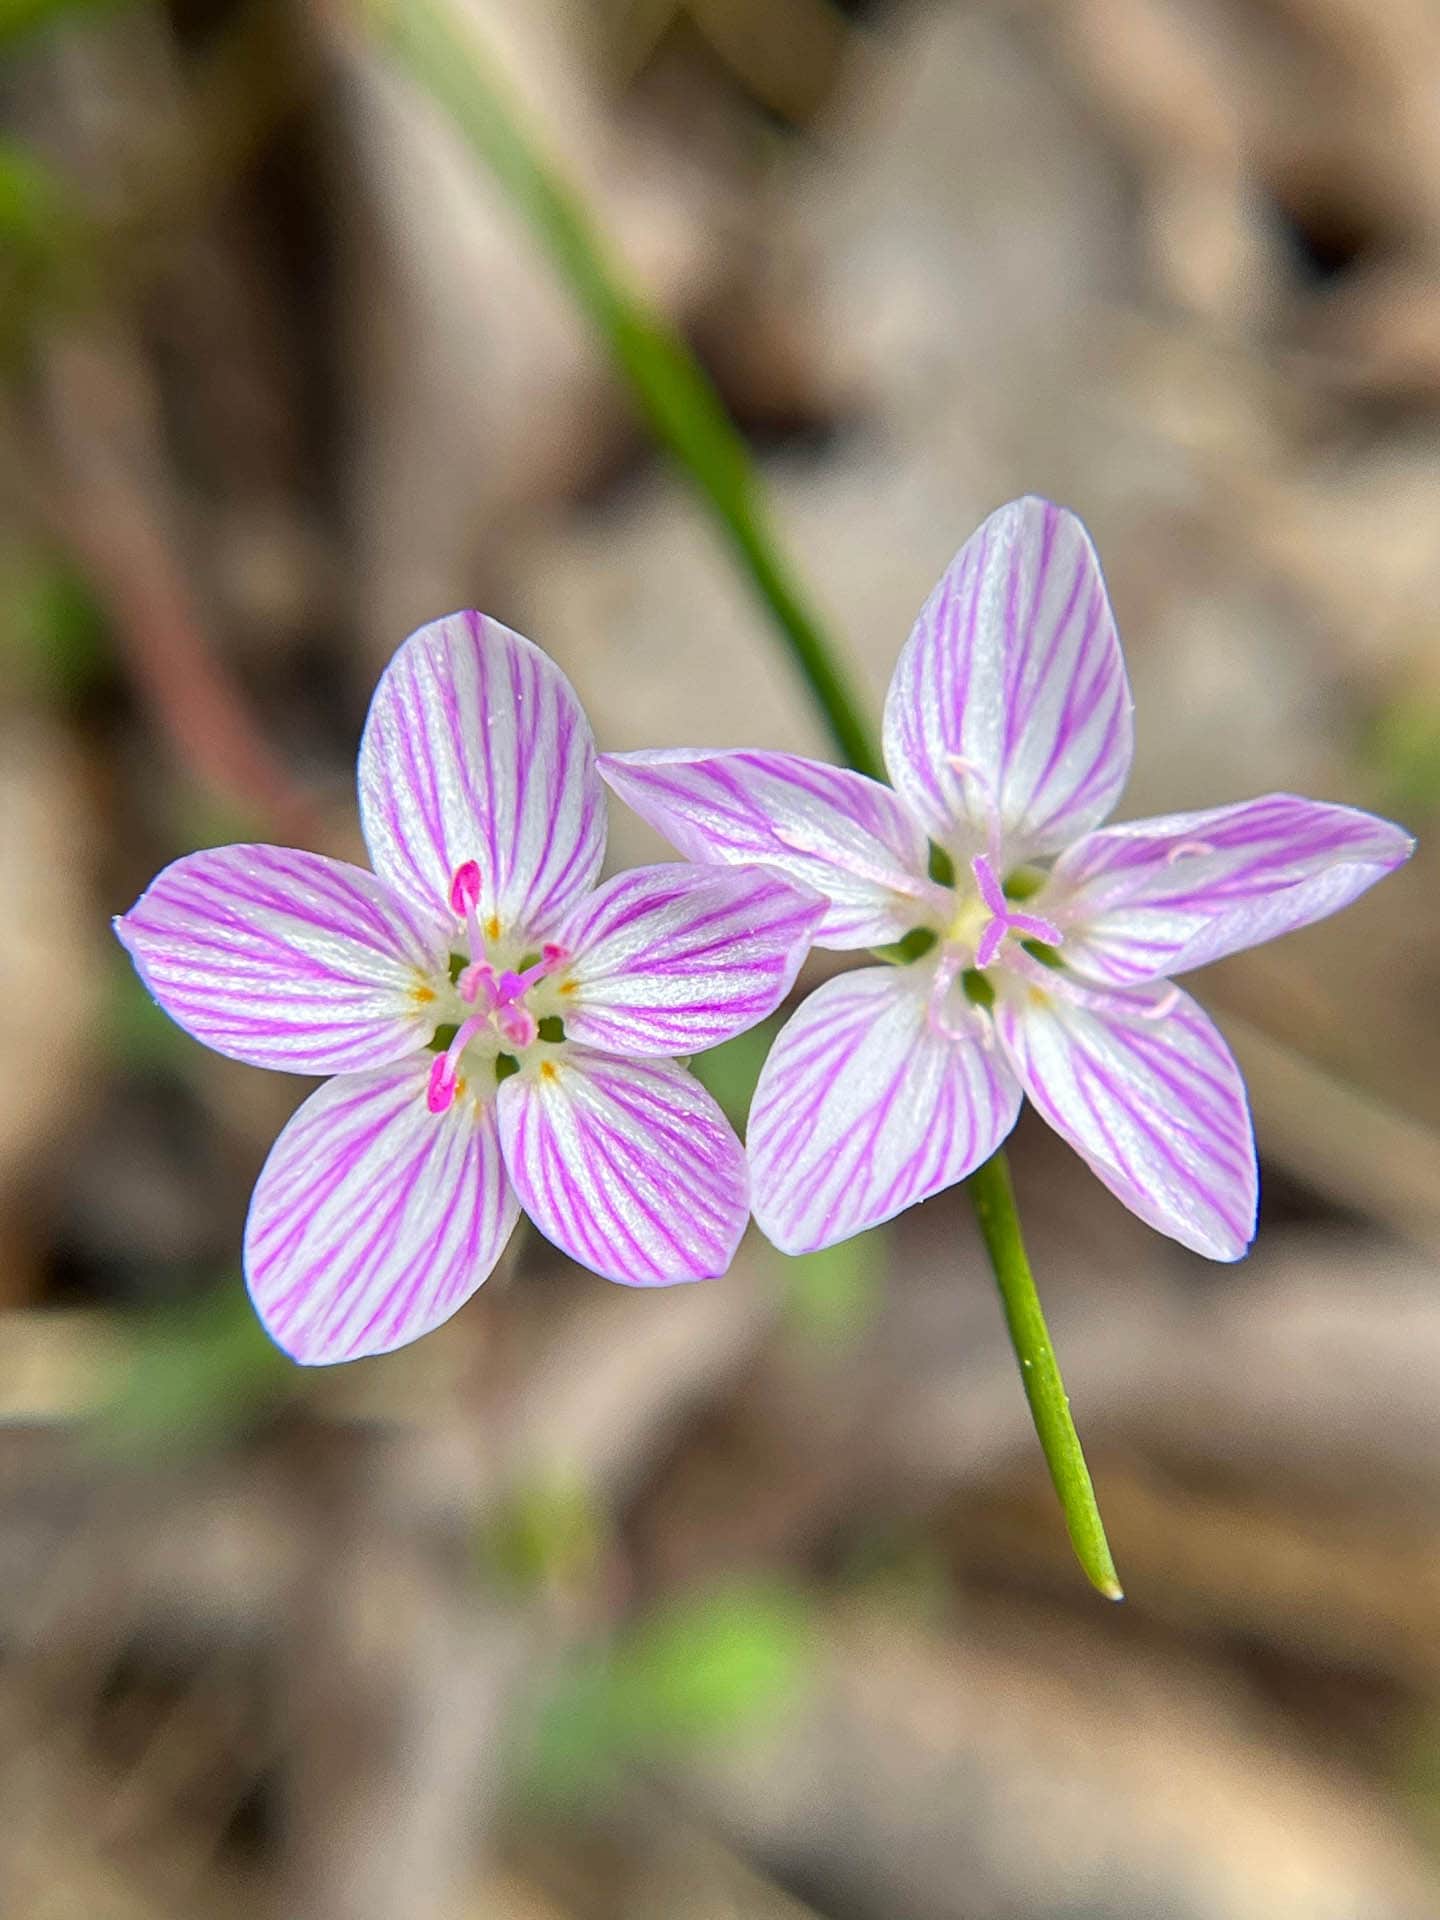 Virginia spring beauty white flowers with purple veining